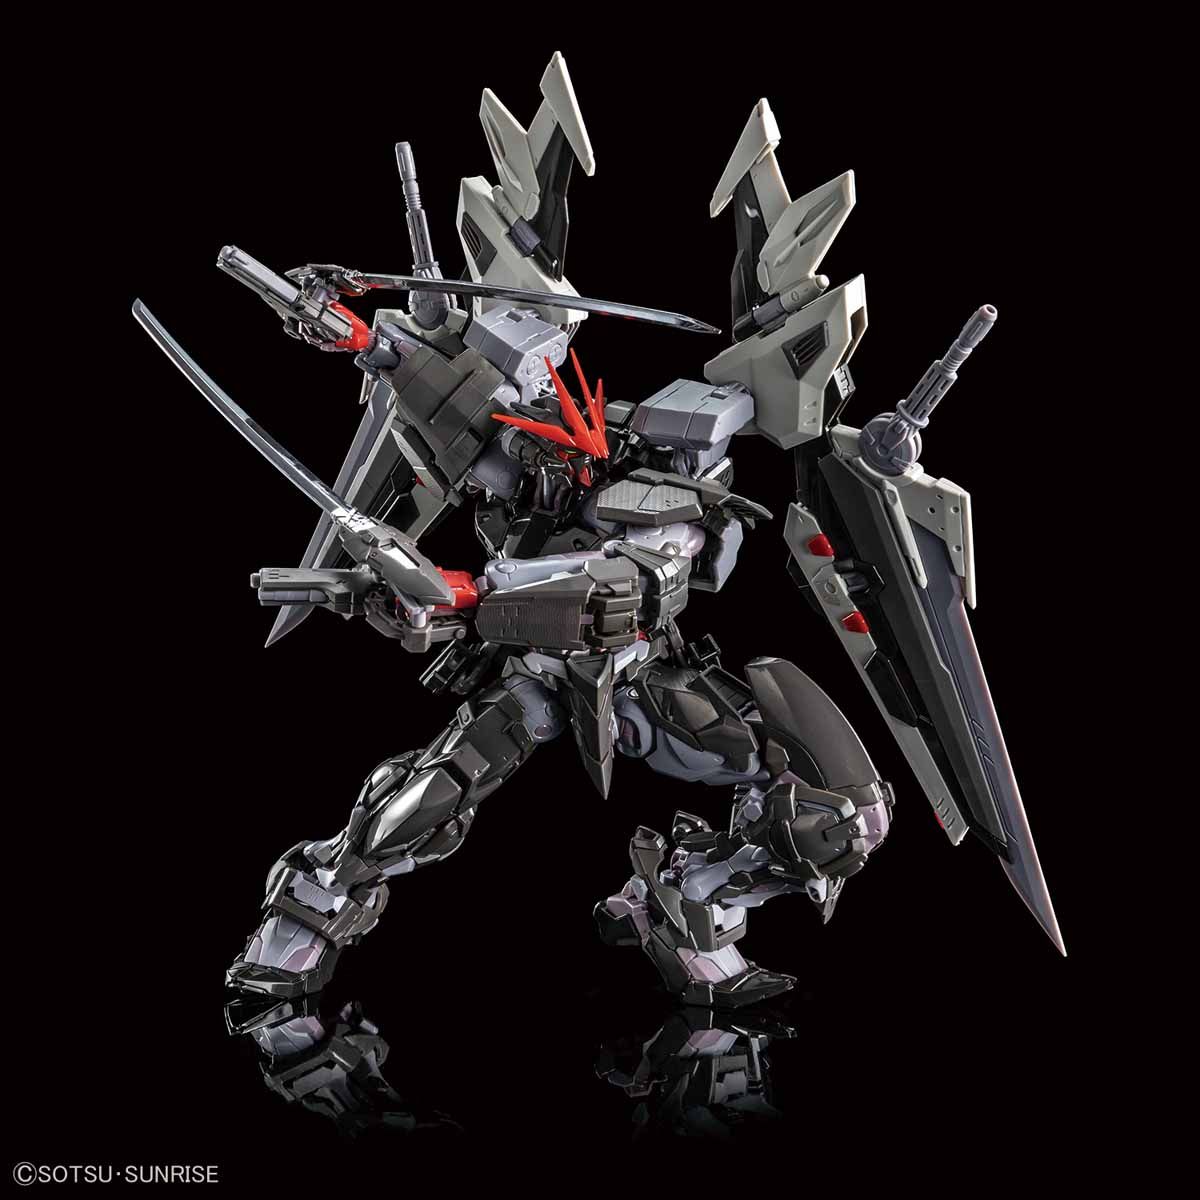 HiRM 1/100 MBF-P0X+AQM/E-X09S Gundam Astray Noir